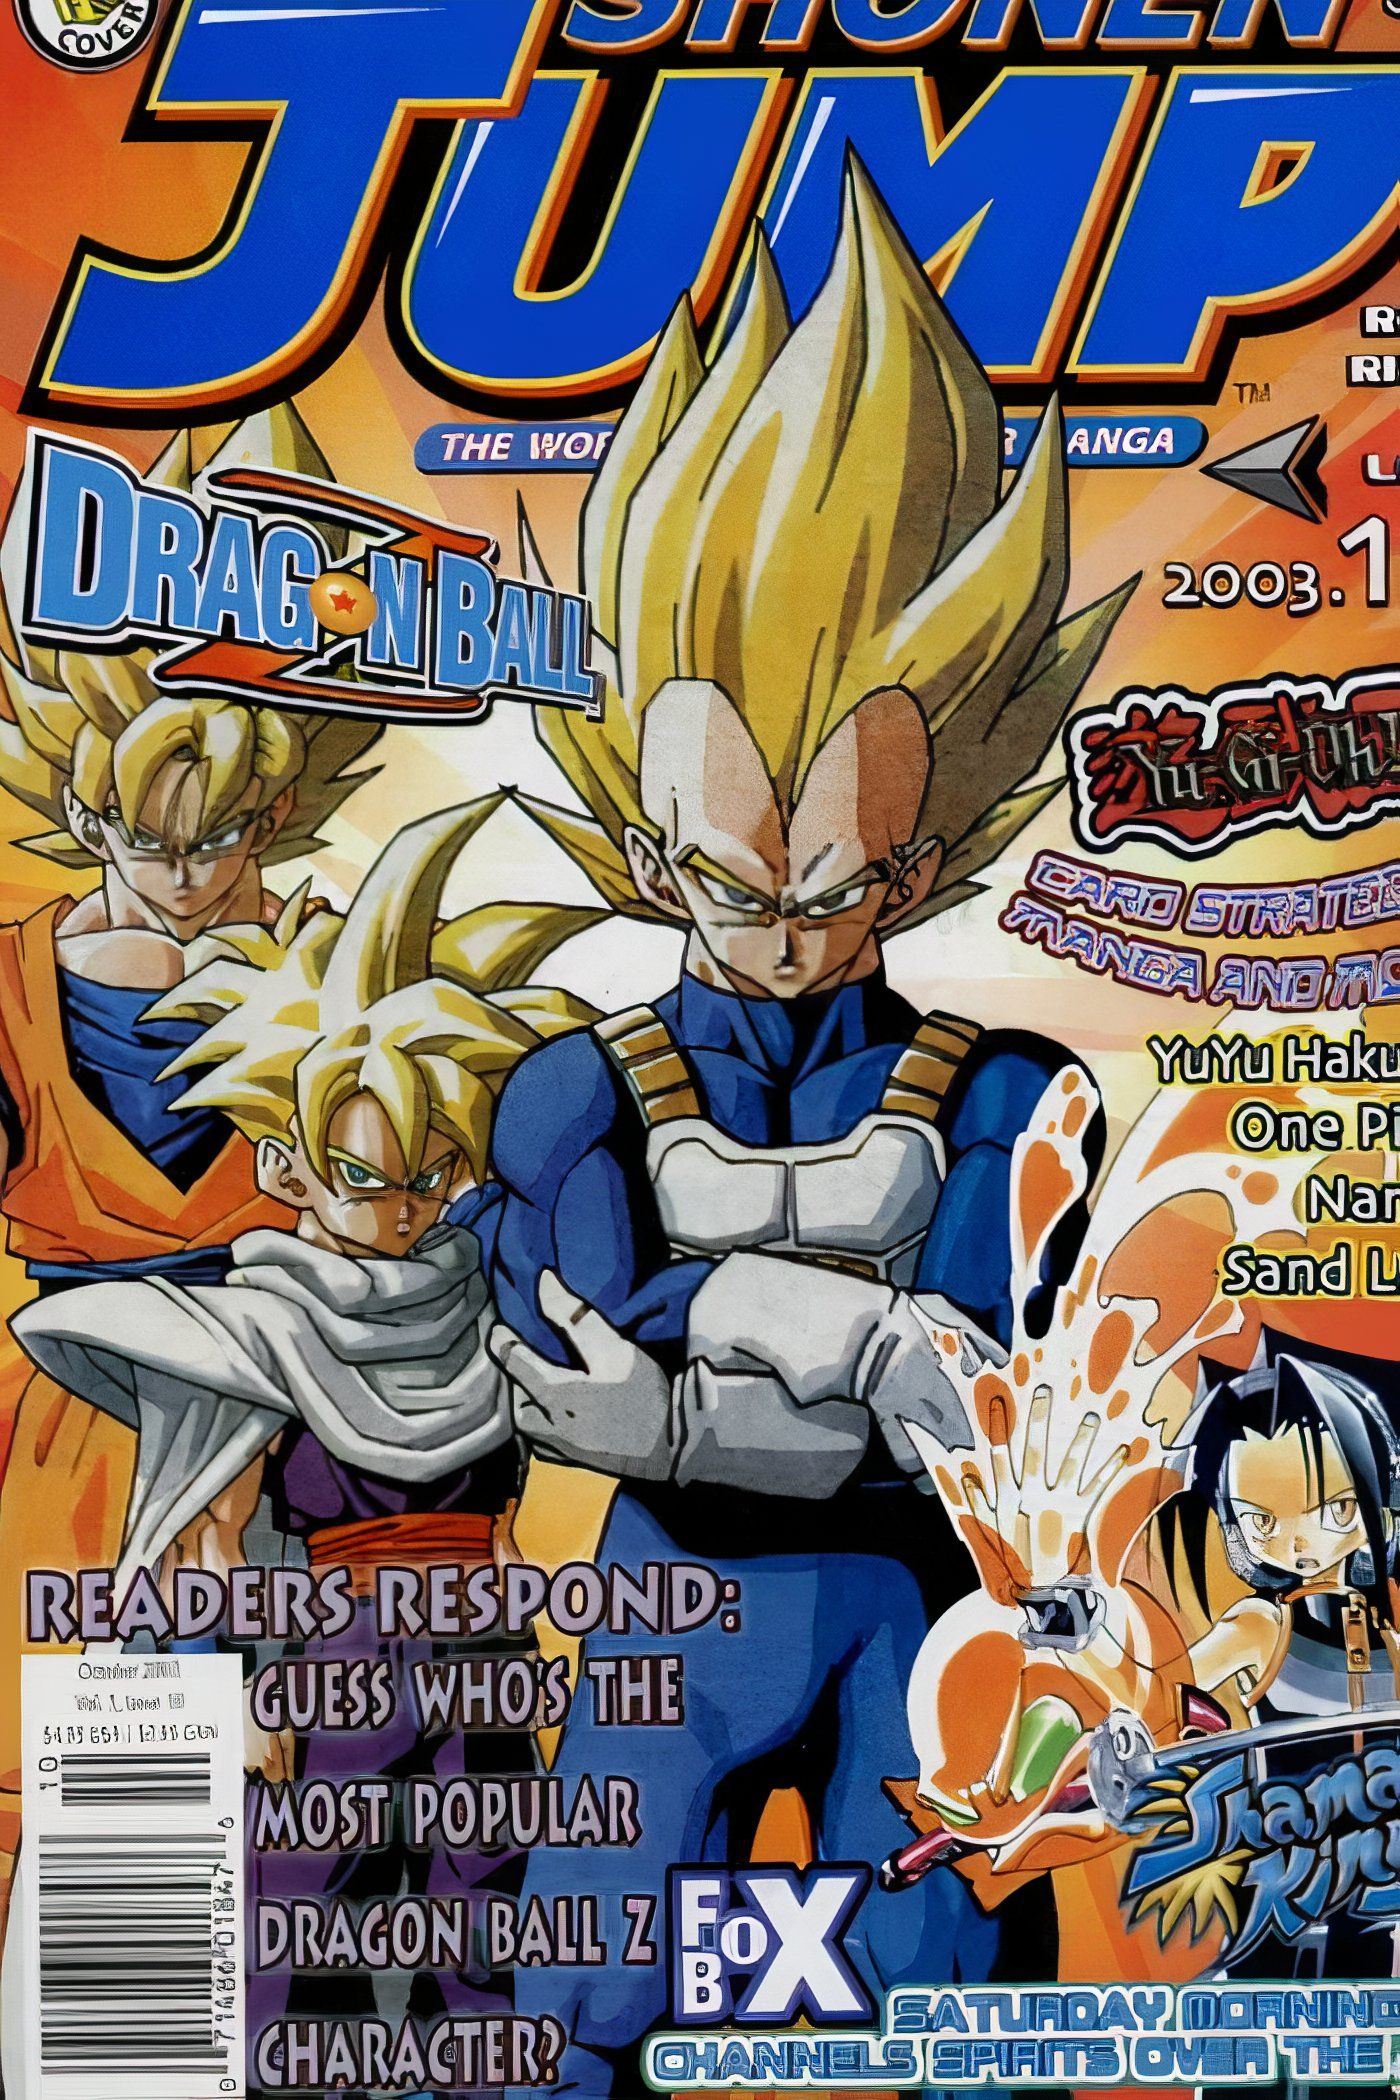 American Weekly Shonen Jump 10 featuring Super Saiyan Goku, Gohan, and Vegeta